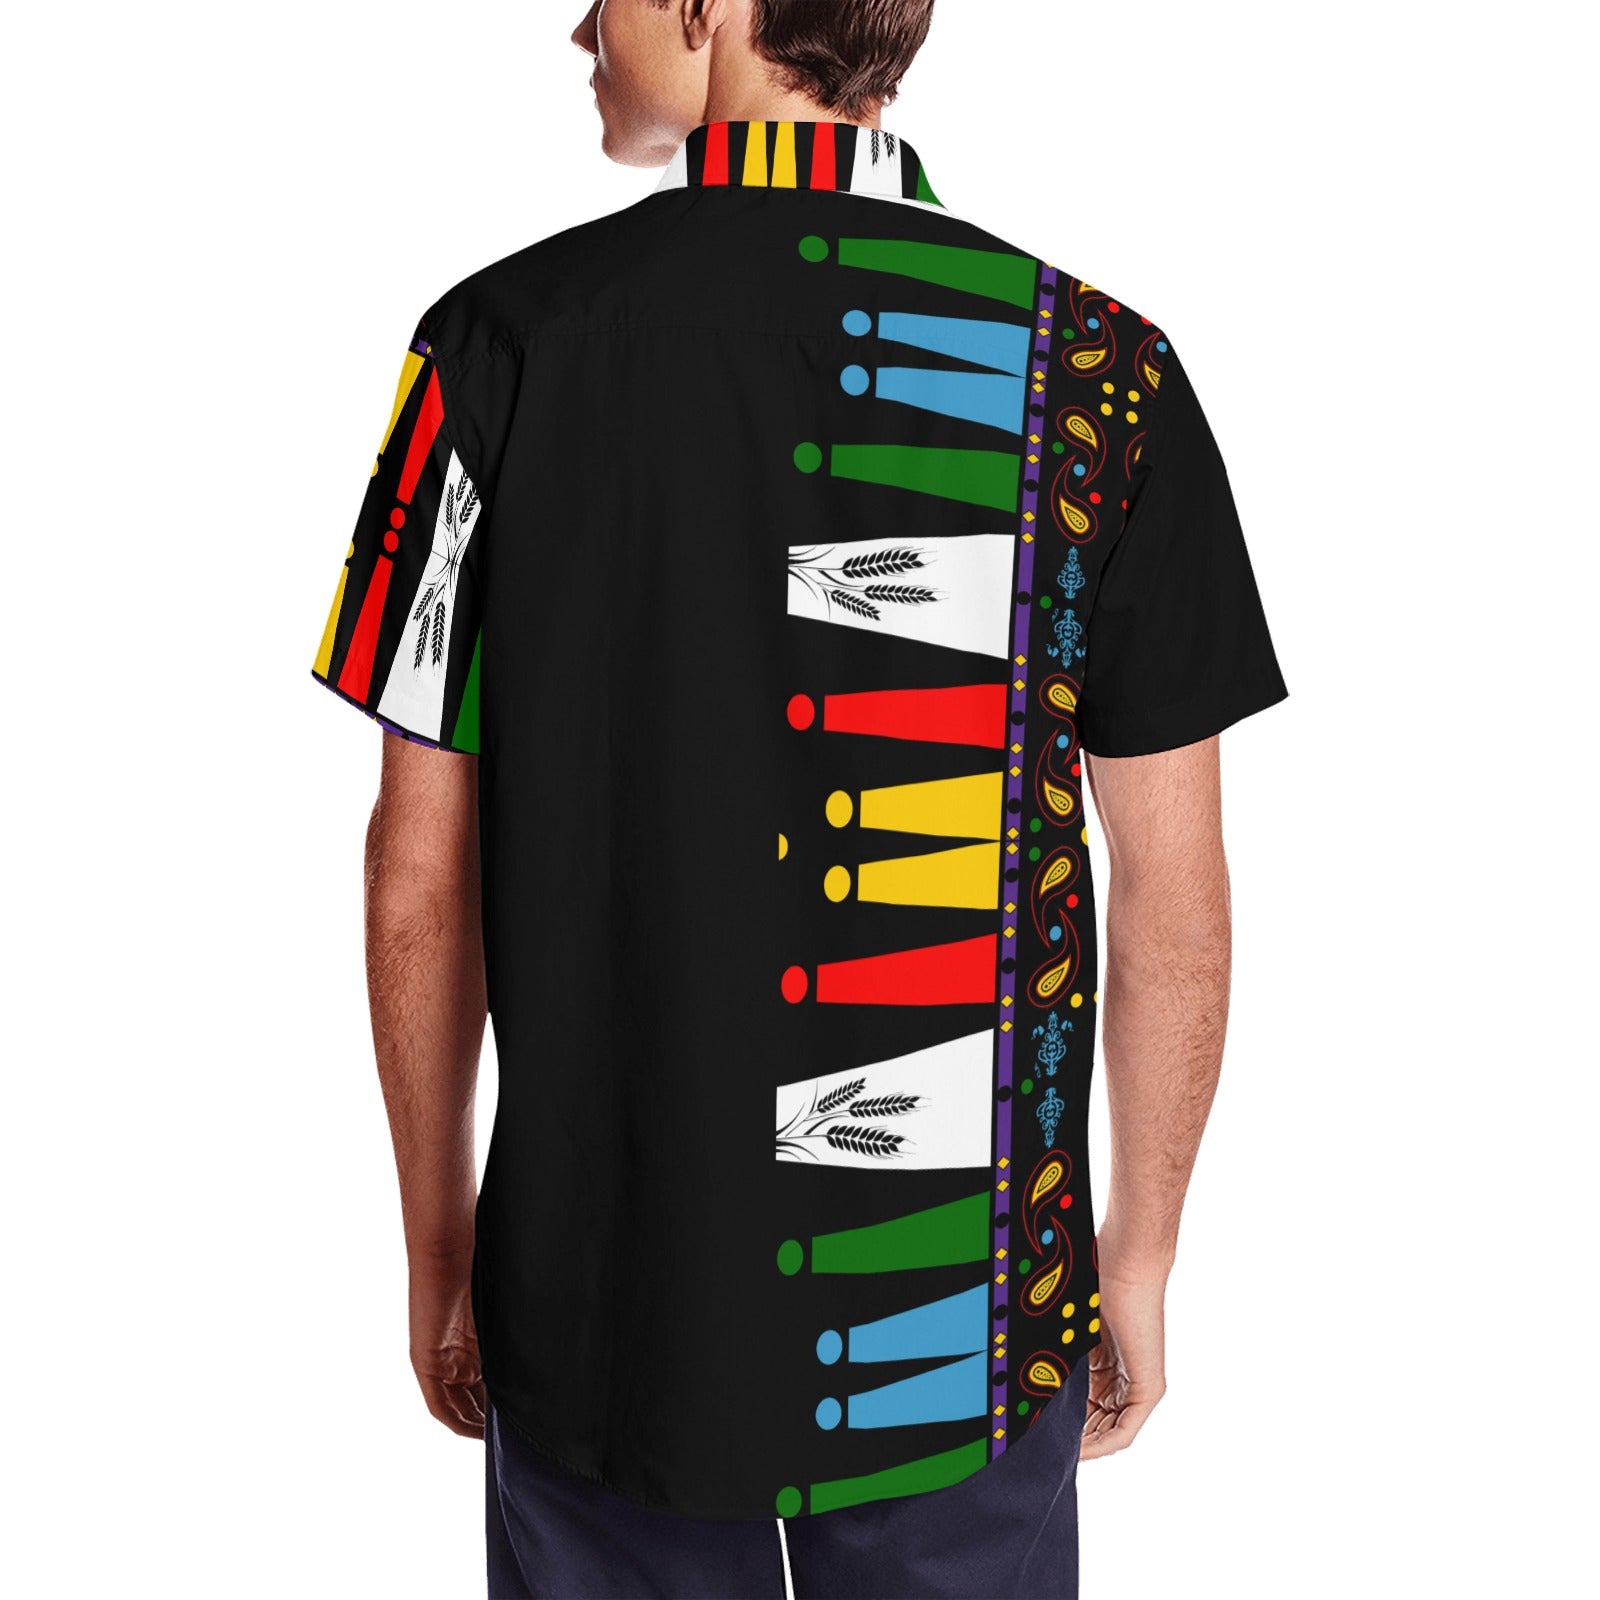 ChuArts "Native" Print  Men's Short Sleeve Shirt With Lapel Collar Half Print.